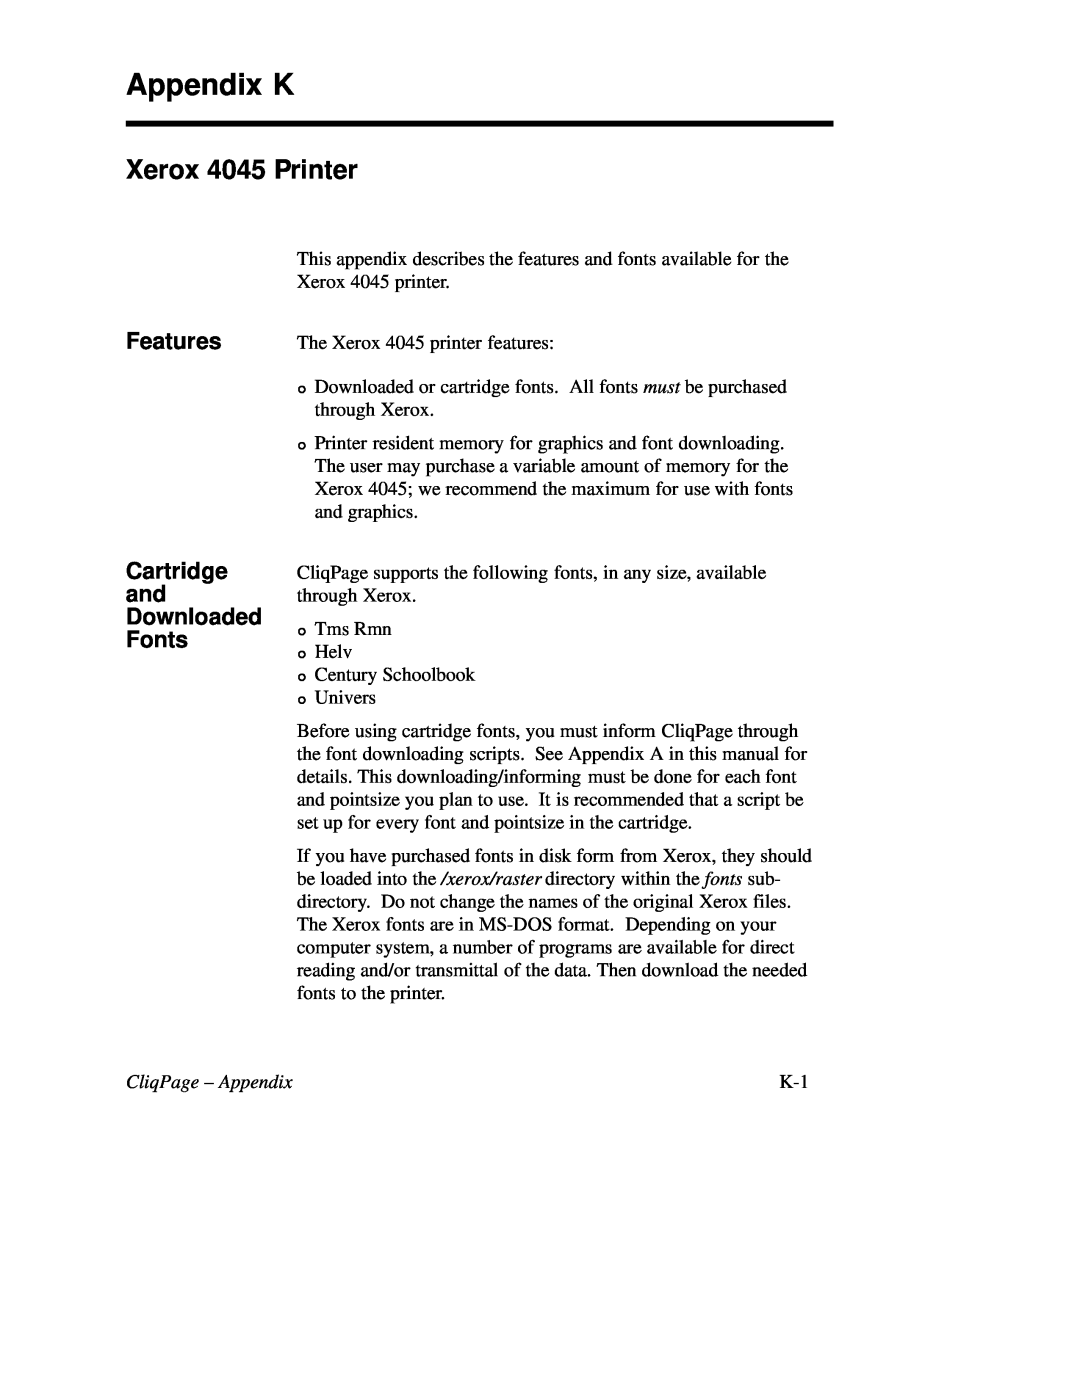 Xerox appendix Features Cartridge and Downloaded Fonts, CliqPage - Appendix, Appendix K, Xerox 4045 Printer 